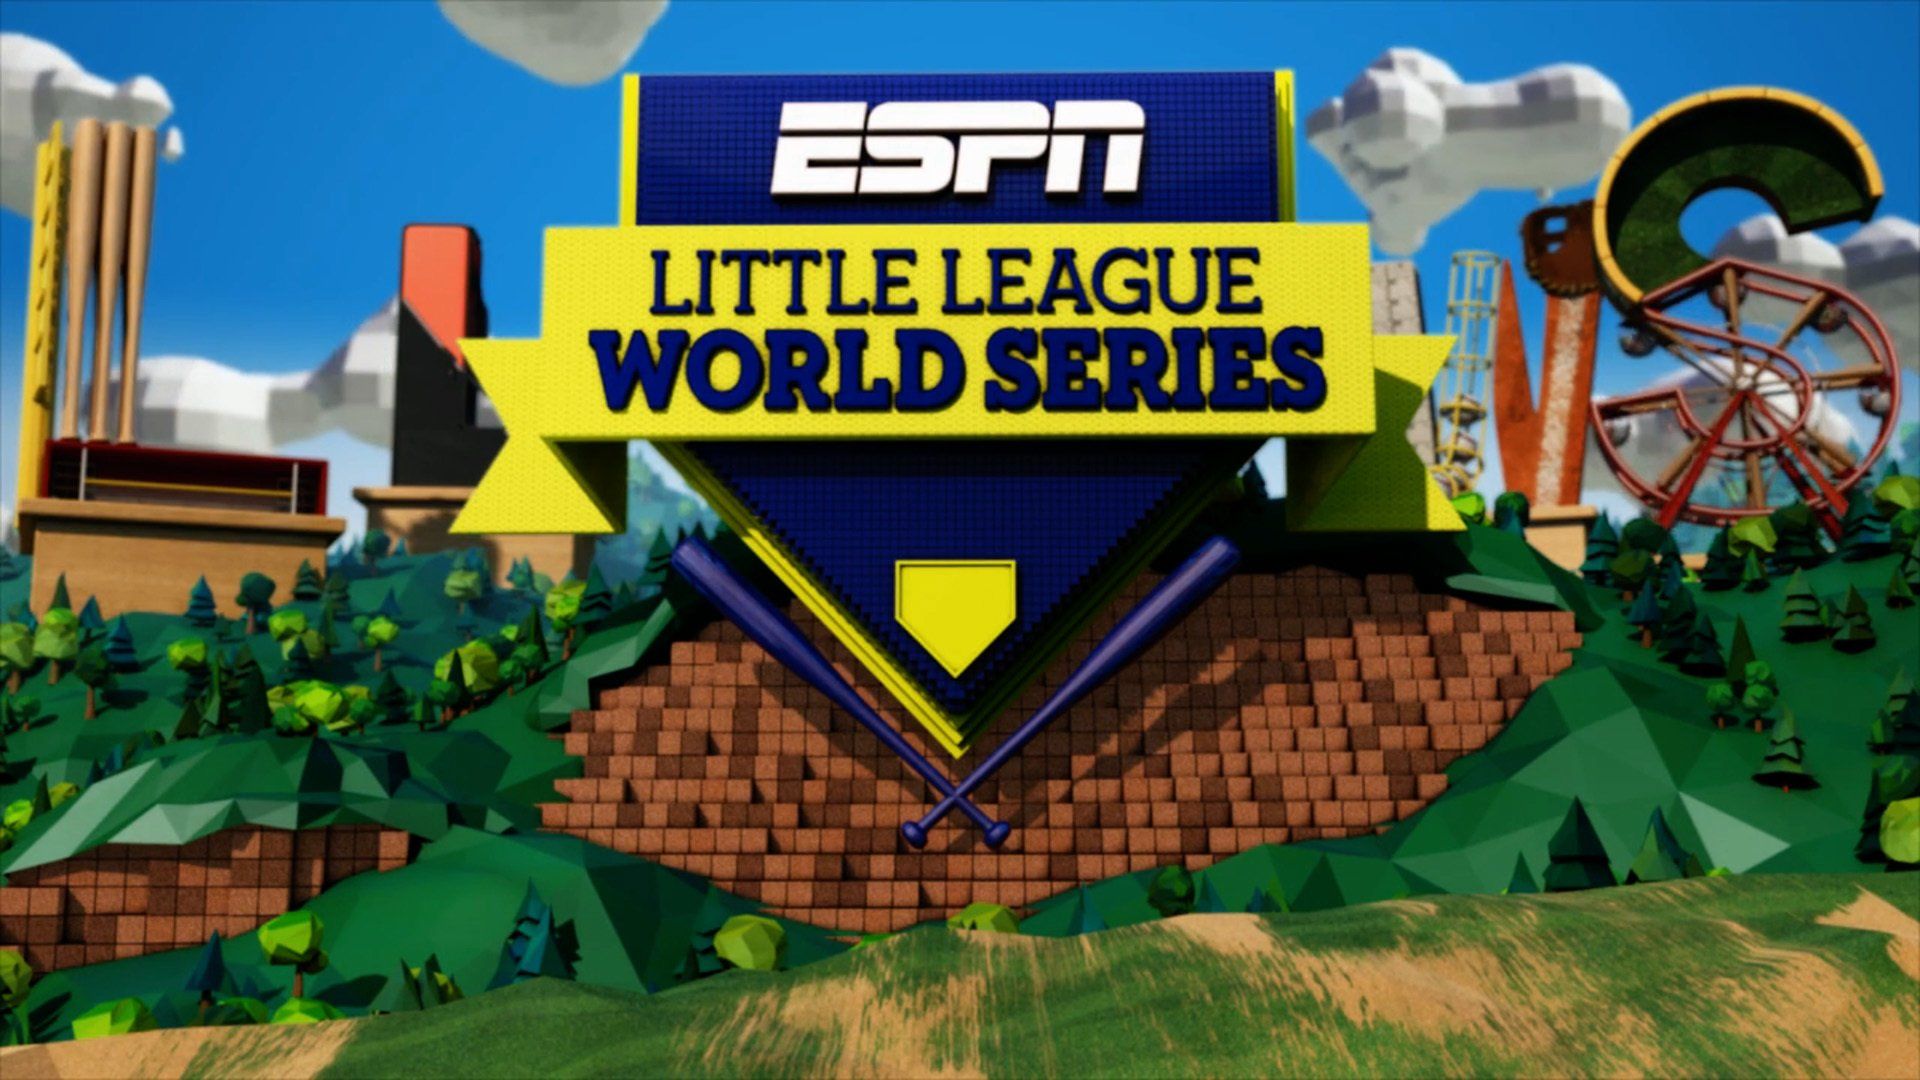 ESPN Little League World Series Rebrand